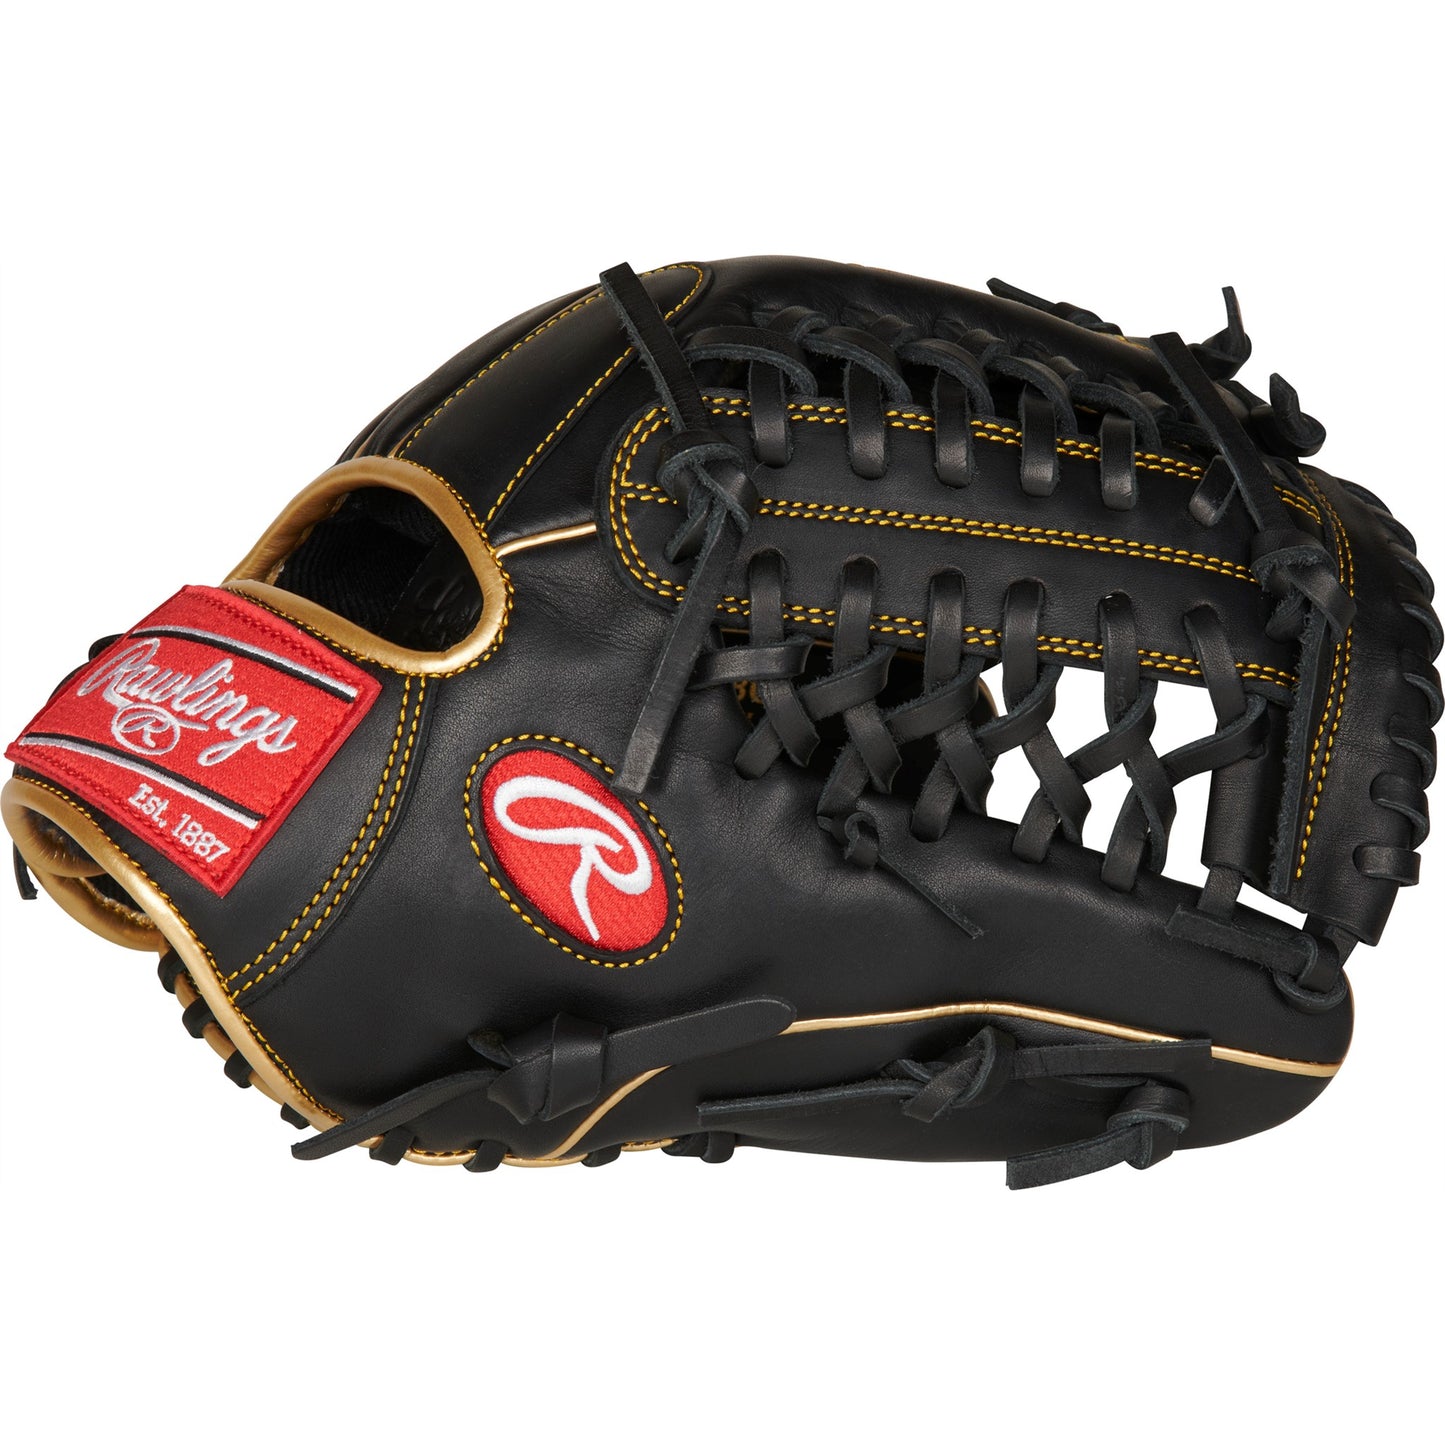 Rawlings (R9205-4BG) R9 Series 11.75" Baseball/Softball Glove